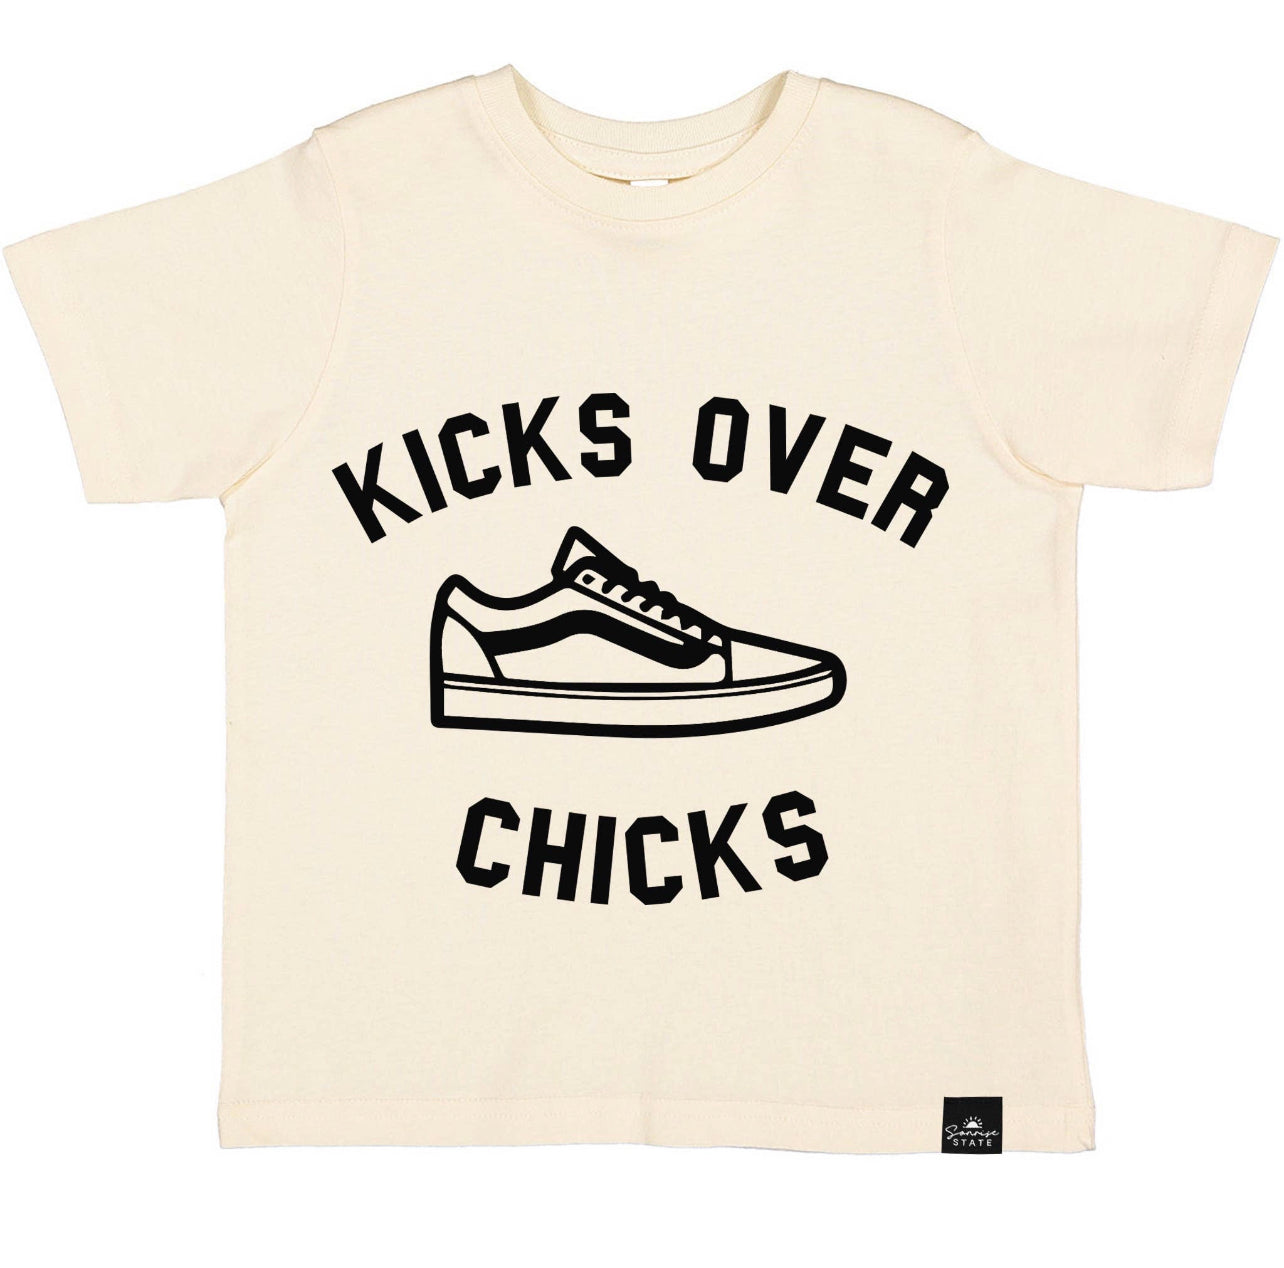 Kicks over chicks tee | cream